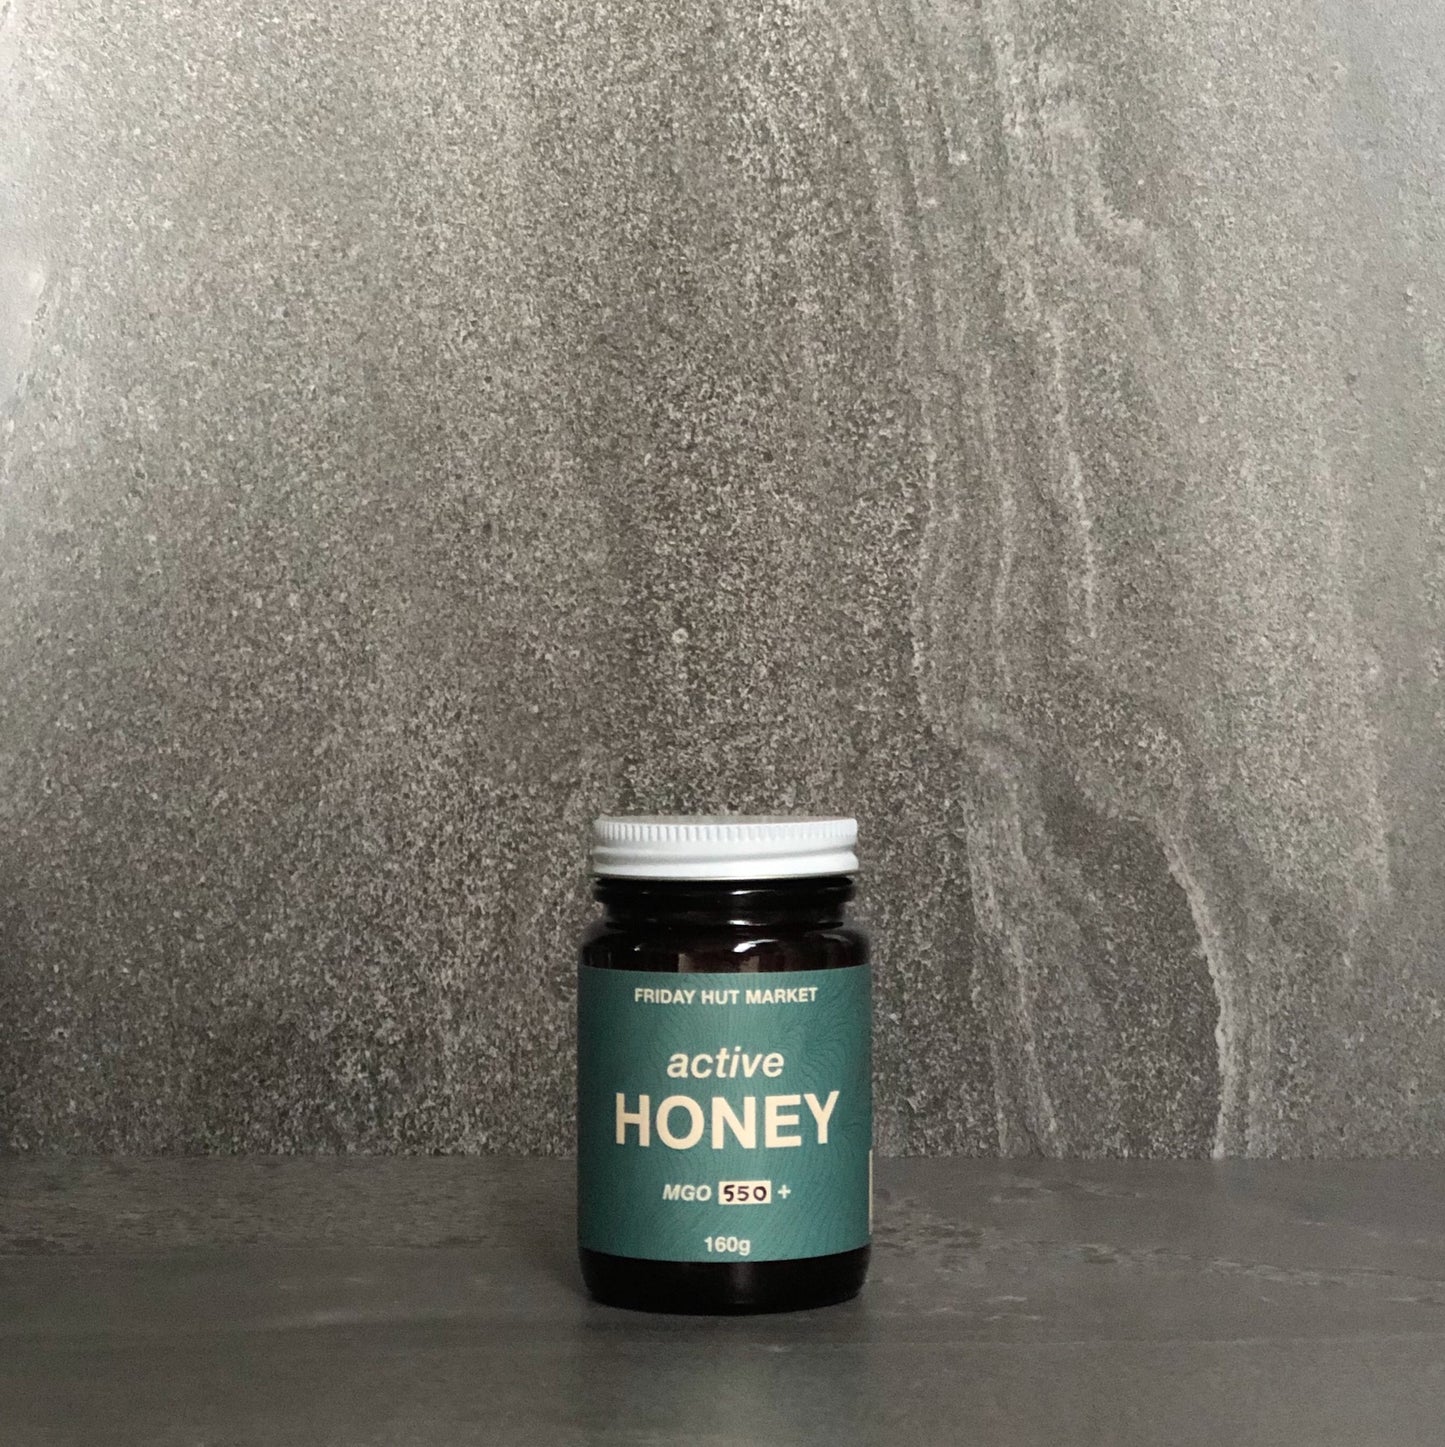 A jar of Friday Hut Market MGO 550+ Active Jellybush Honey. Australia's Manuka